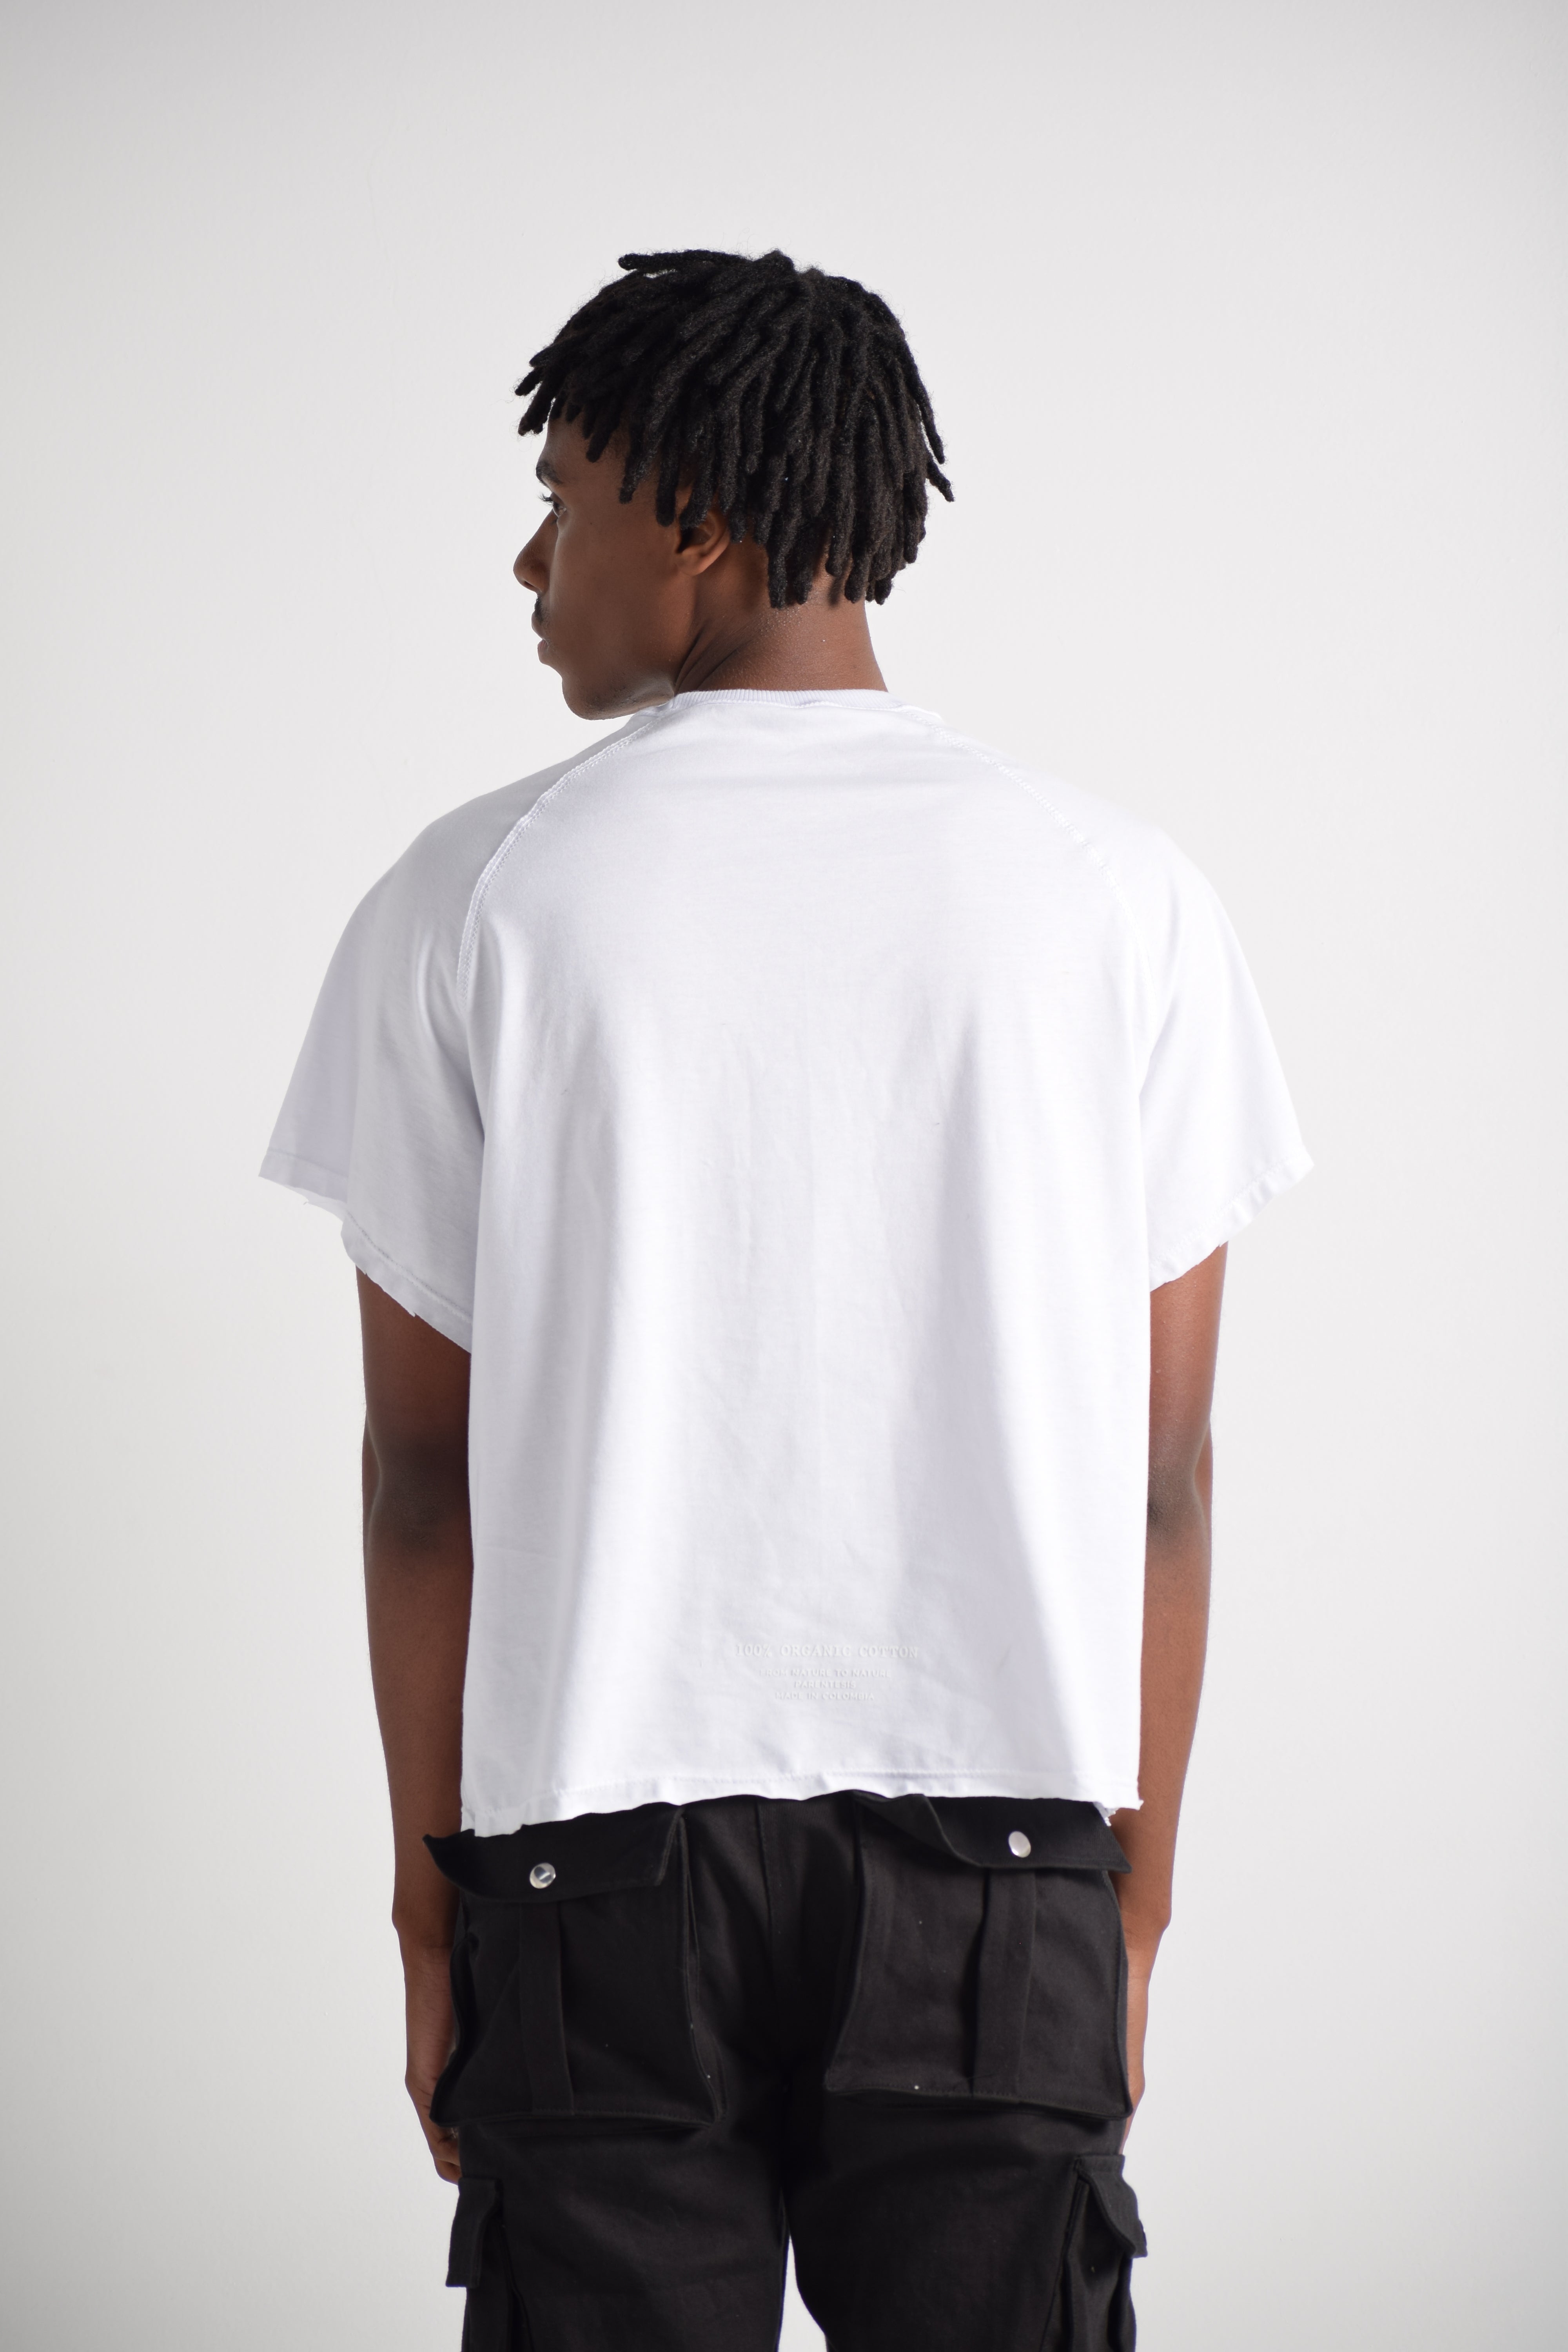 T-Shirt Arena Blanca- 100% Algodón Orgánico